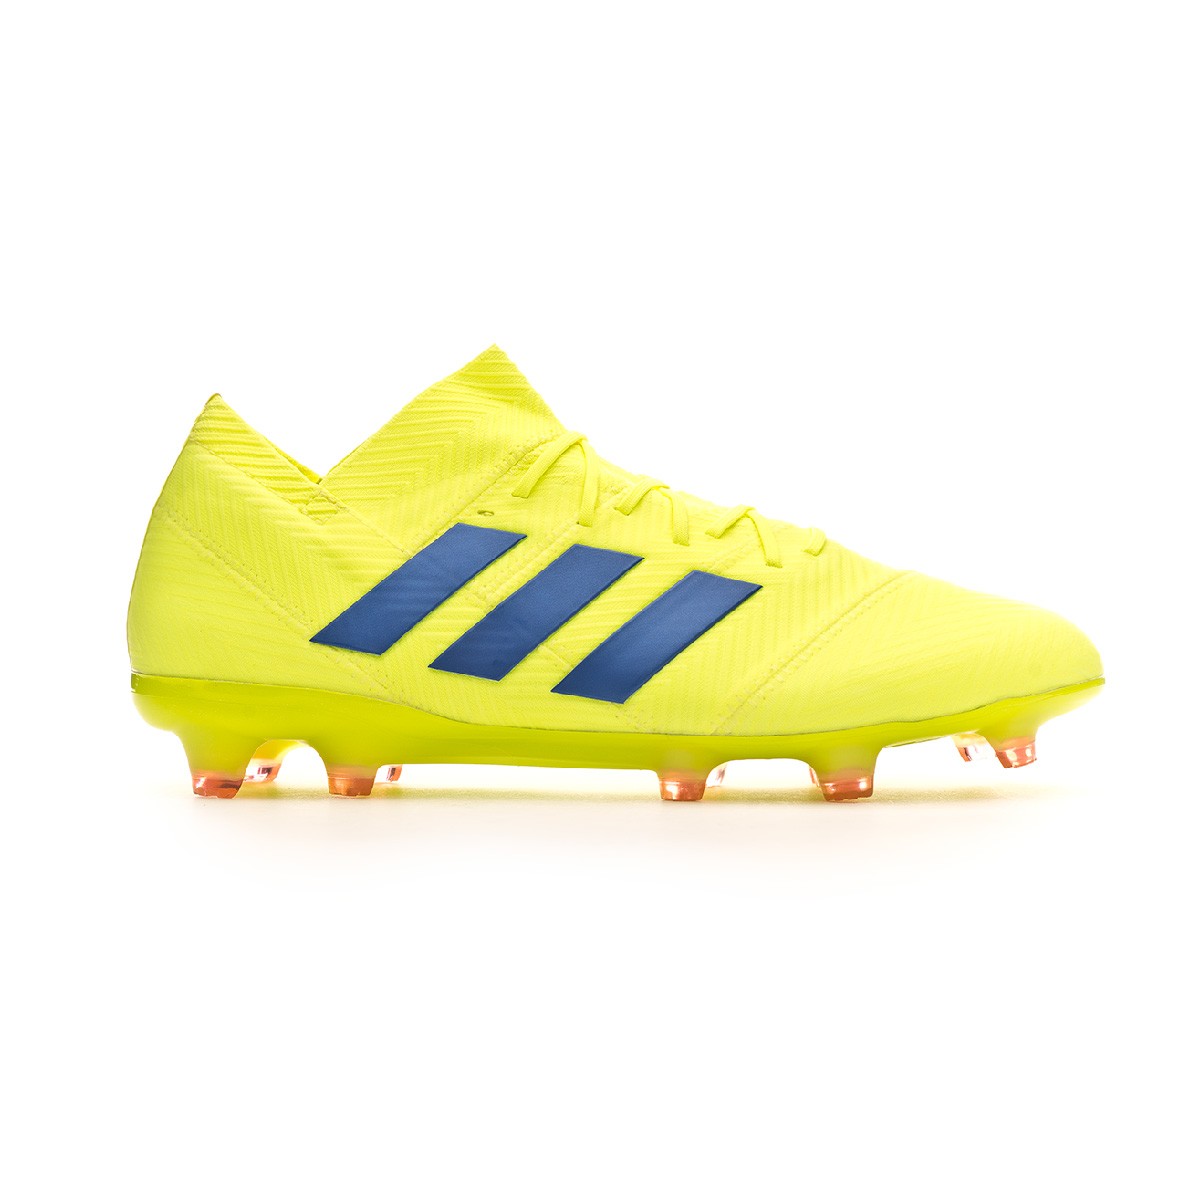 Bota de fútbol adidas Nemeziz 18.1 FG Solar yellow-Football blue-Active red  - Tienda de fútbol Fútbol Emotion